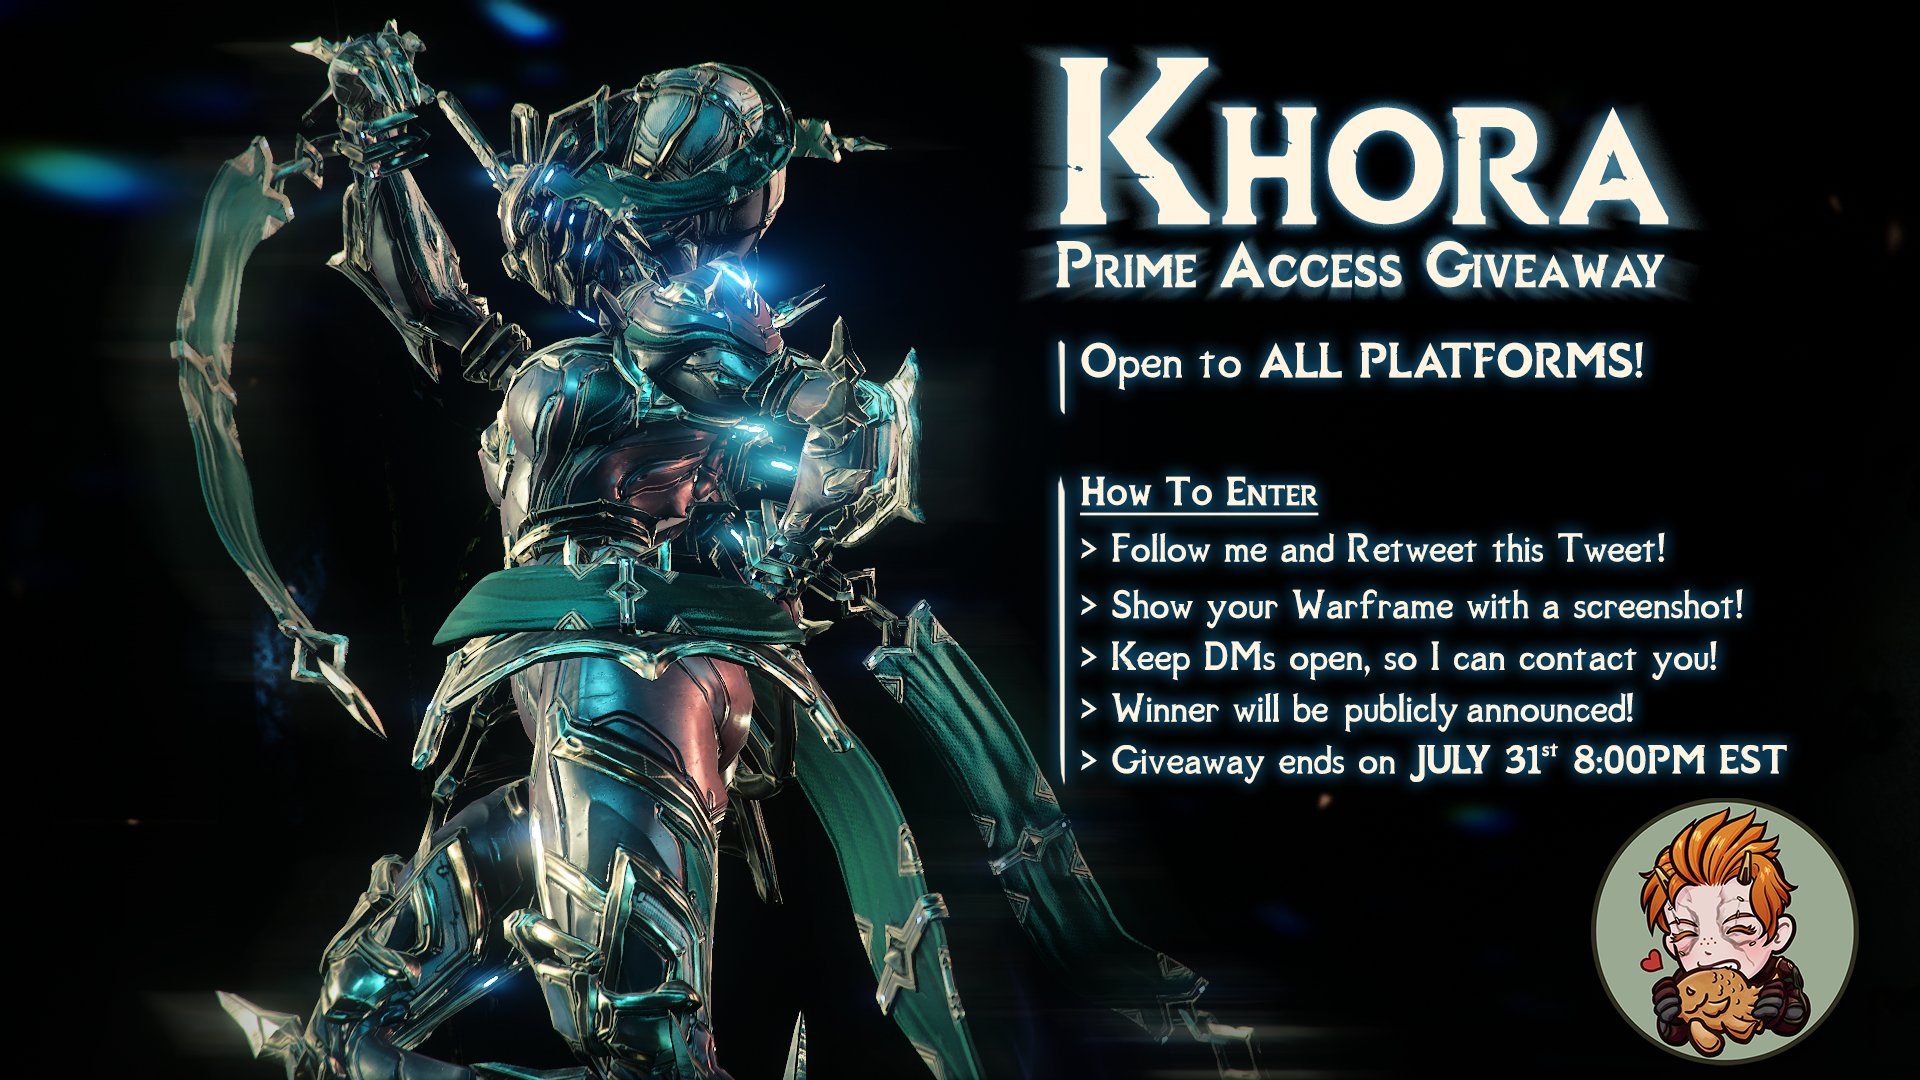 Warframe: Khora Prime Access